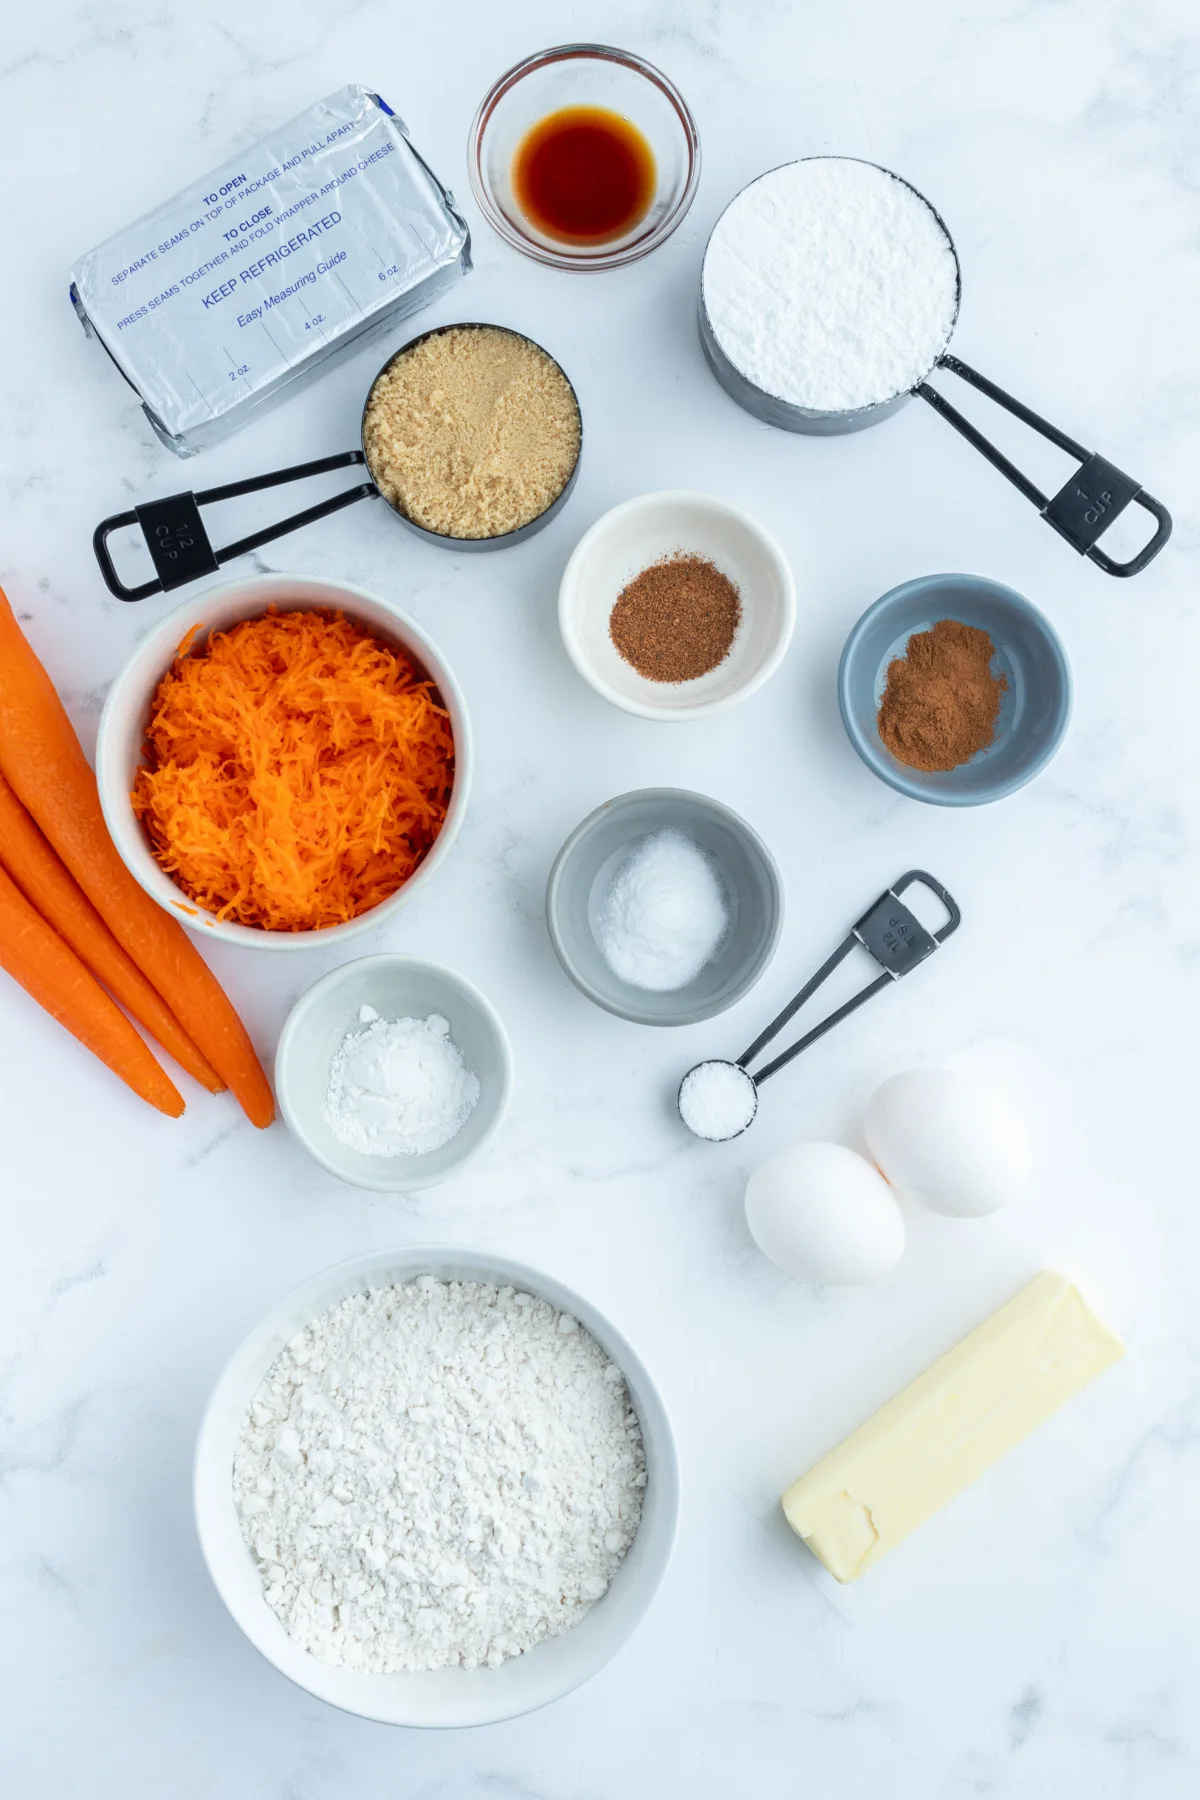 ingredients displayed for making carrot loaf cake